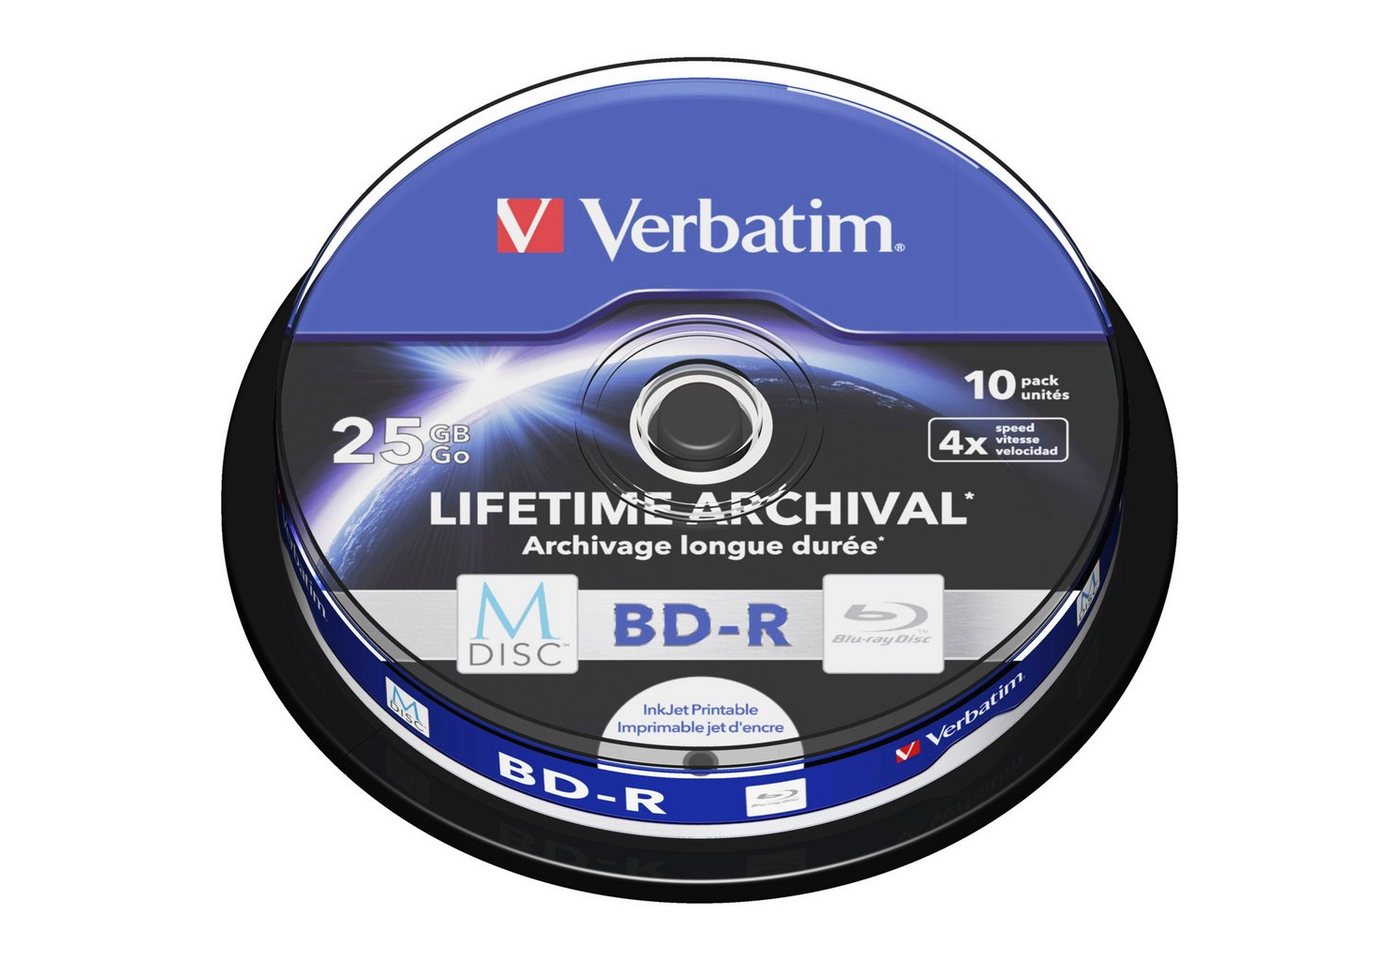 Verbatim Blu-ray-Rohling M-DISC BD-R 4x 25 GB von Verbatim